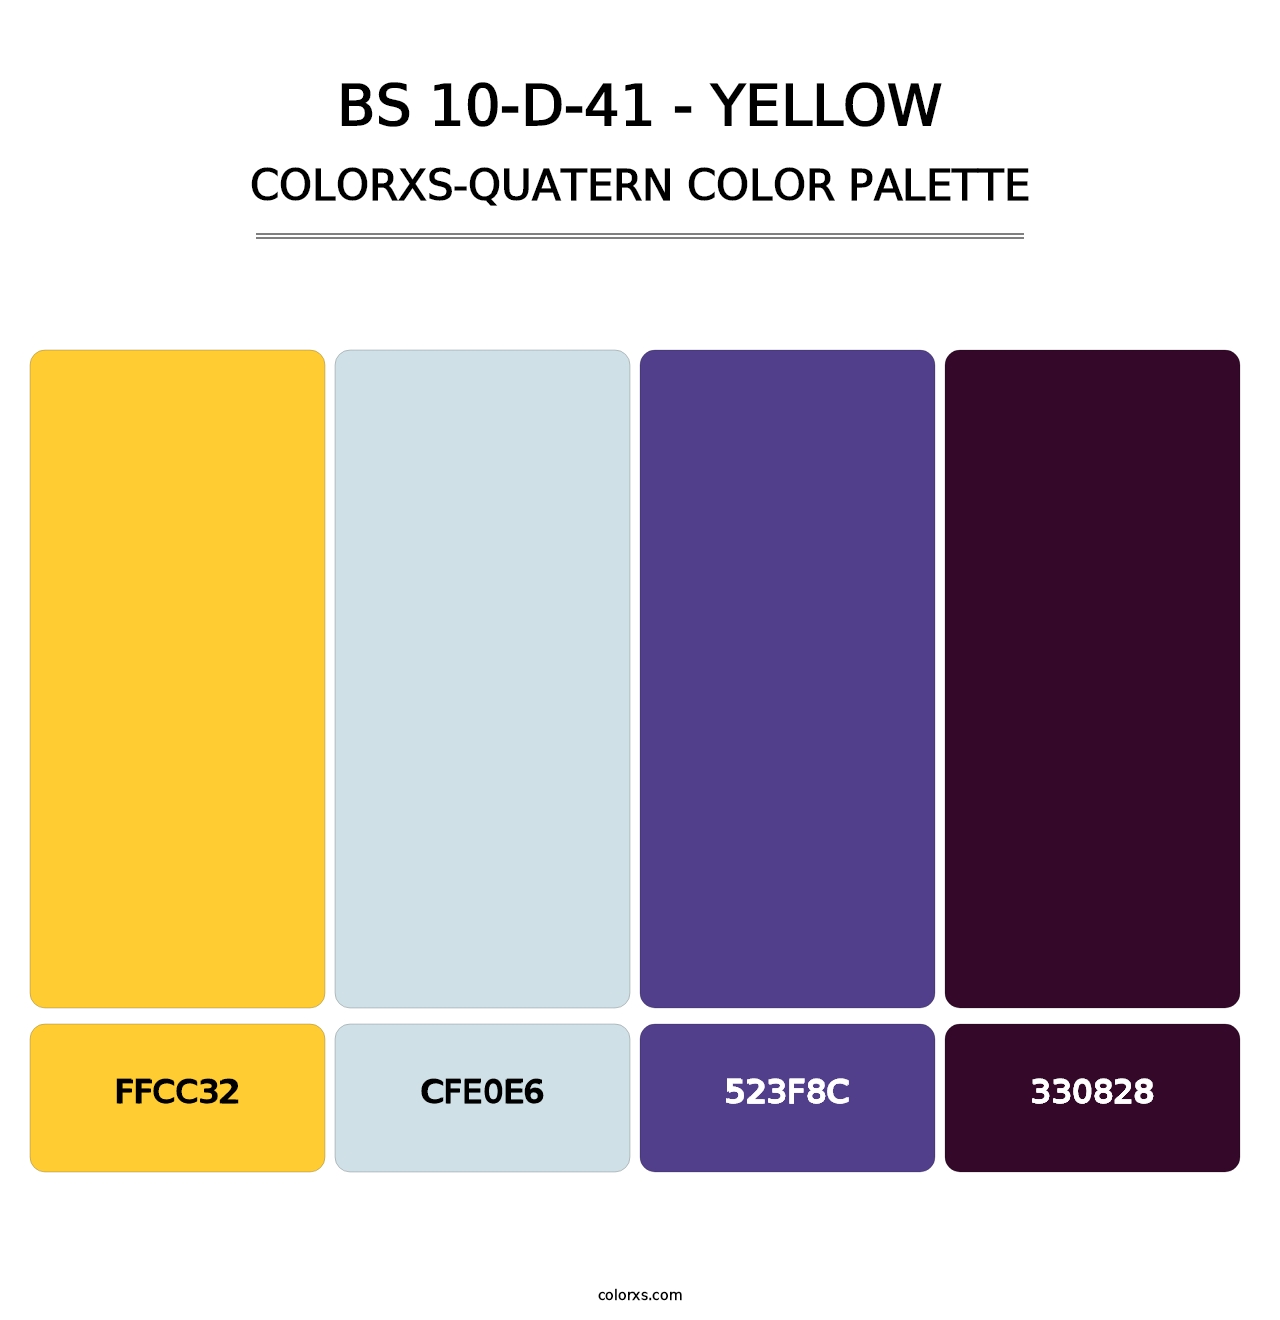 BS 10-D-41 - Yellow - Colorxs Quatern Palette